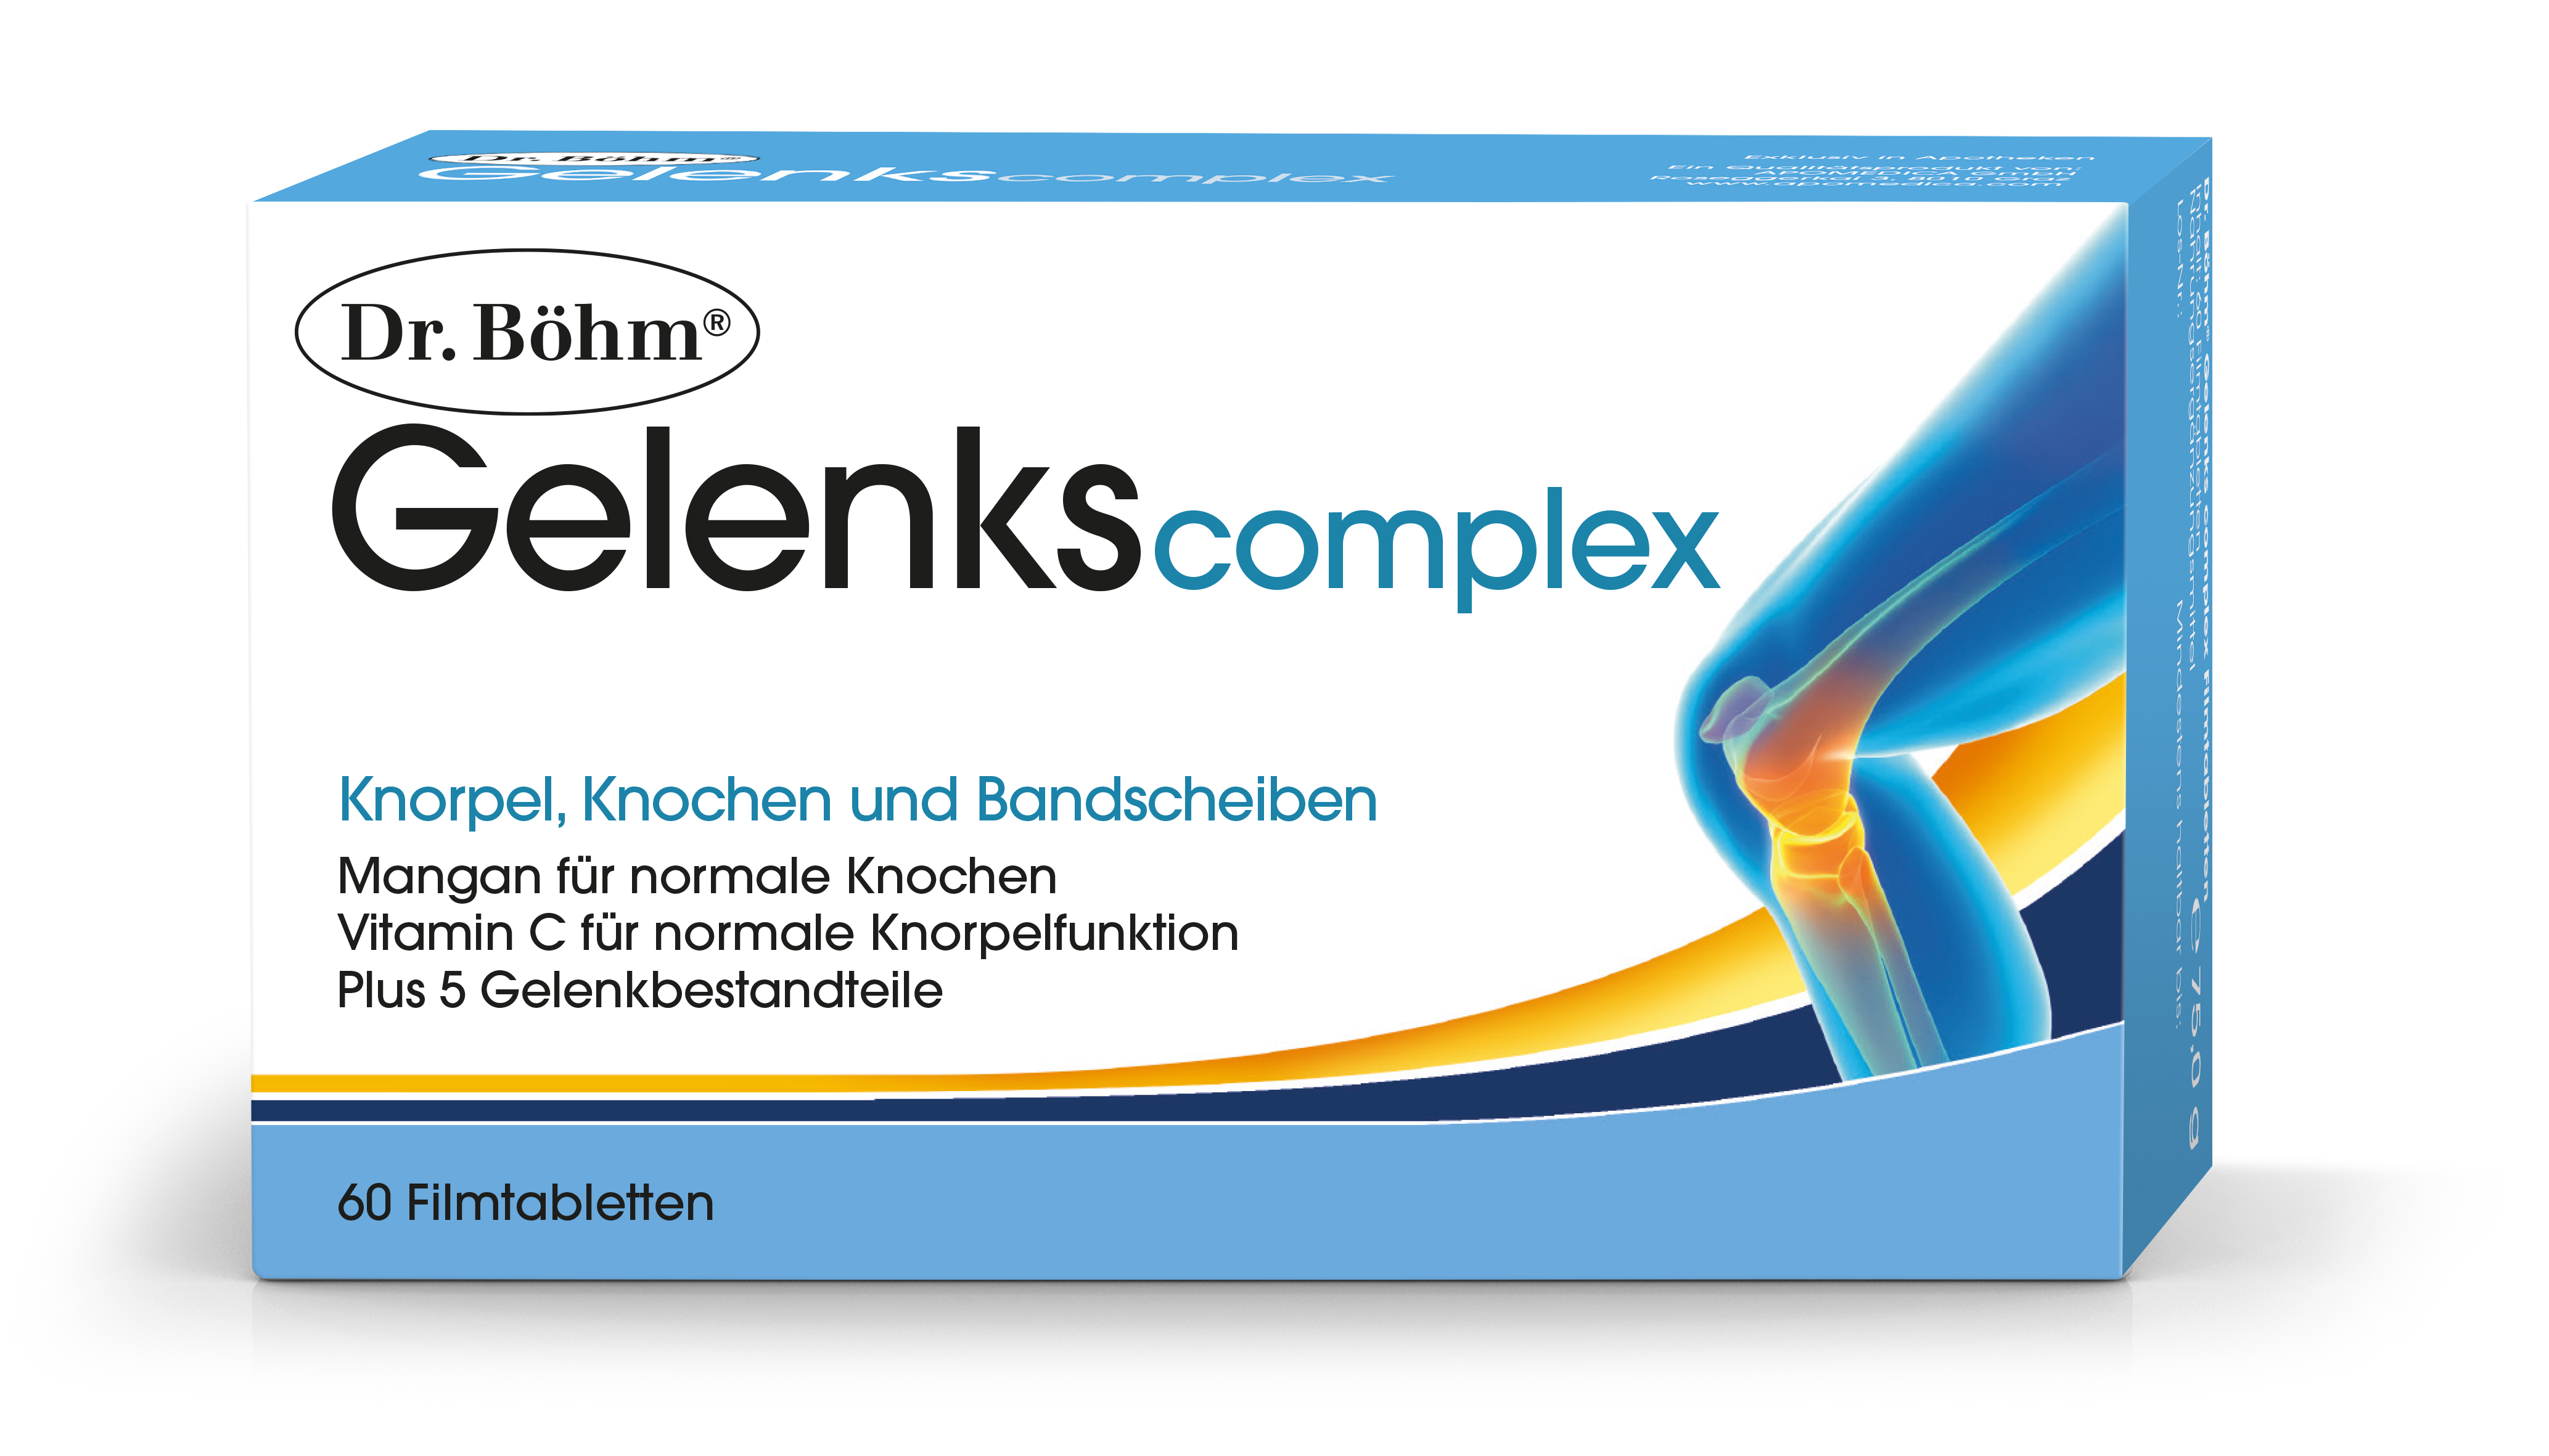 Dr. Böhm Gelenks complex